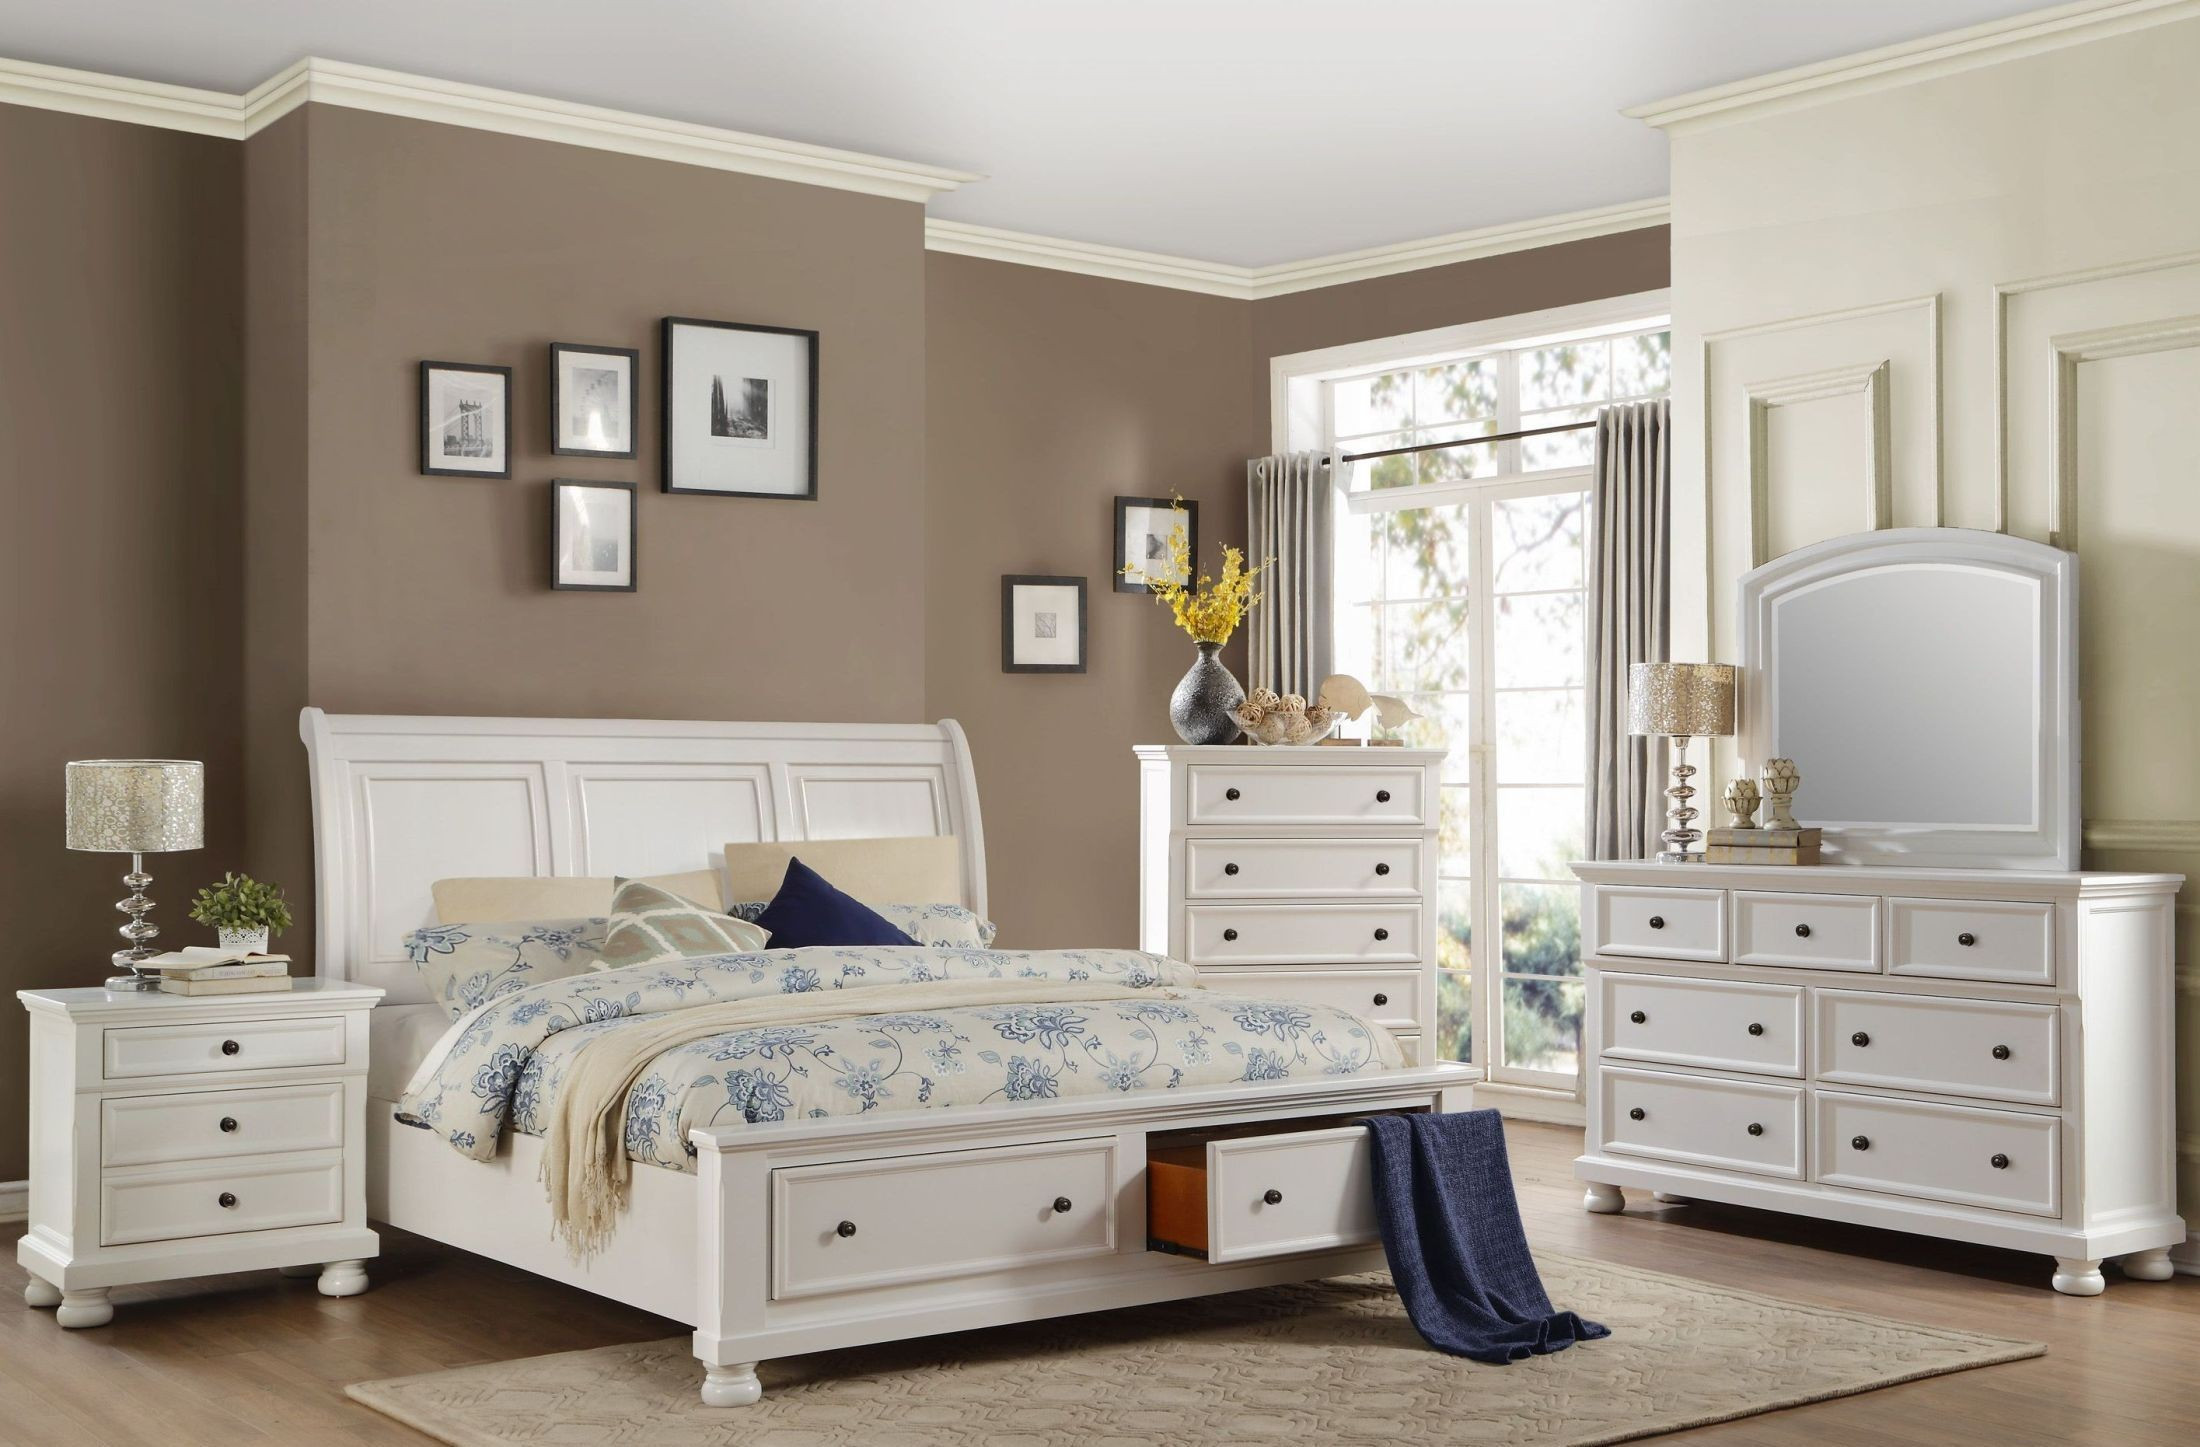 Storage Bedroom Furniture
 Laurelin White Sleigh Storage Bedroom Set from Homelegance